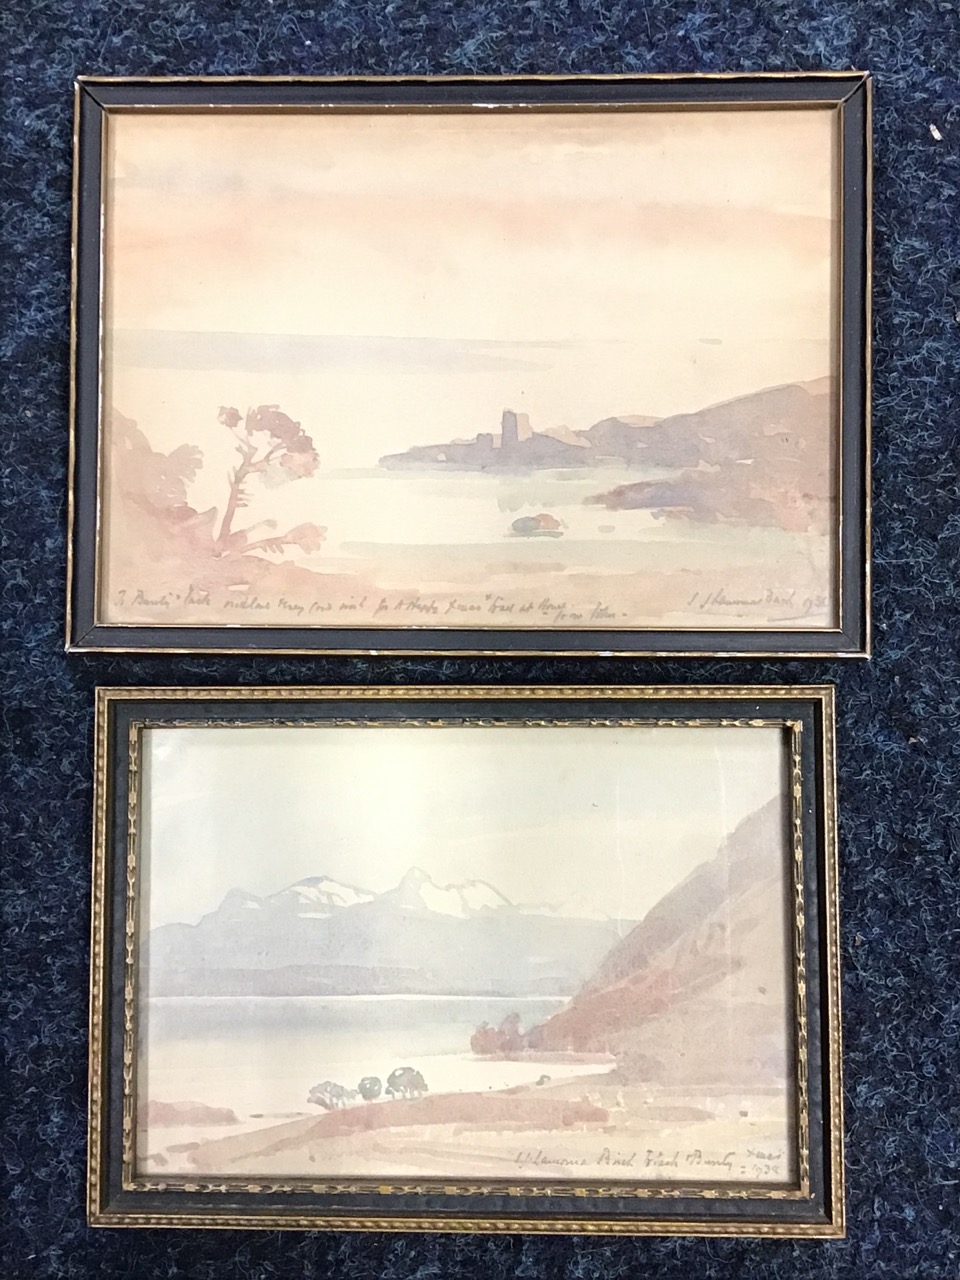 Samuel Lamorna Birch, watercolours, a pair, two Christmas card water landscape scenes, both